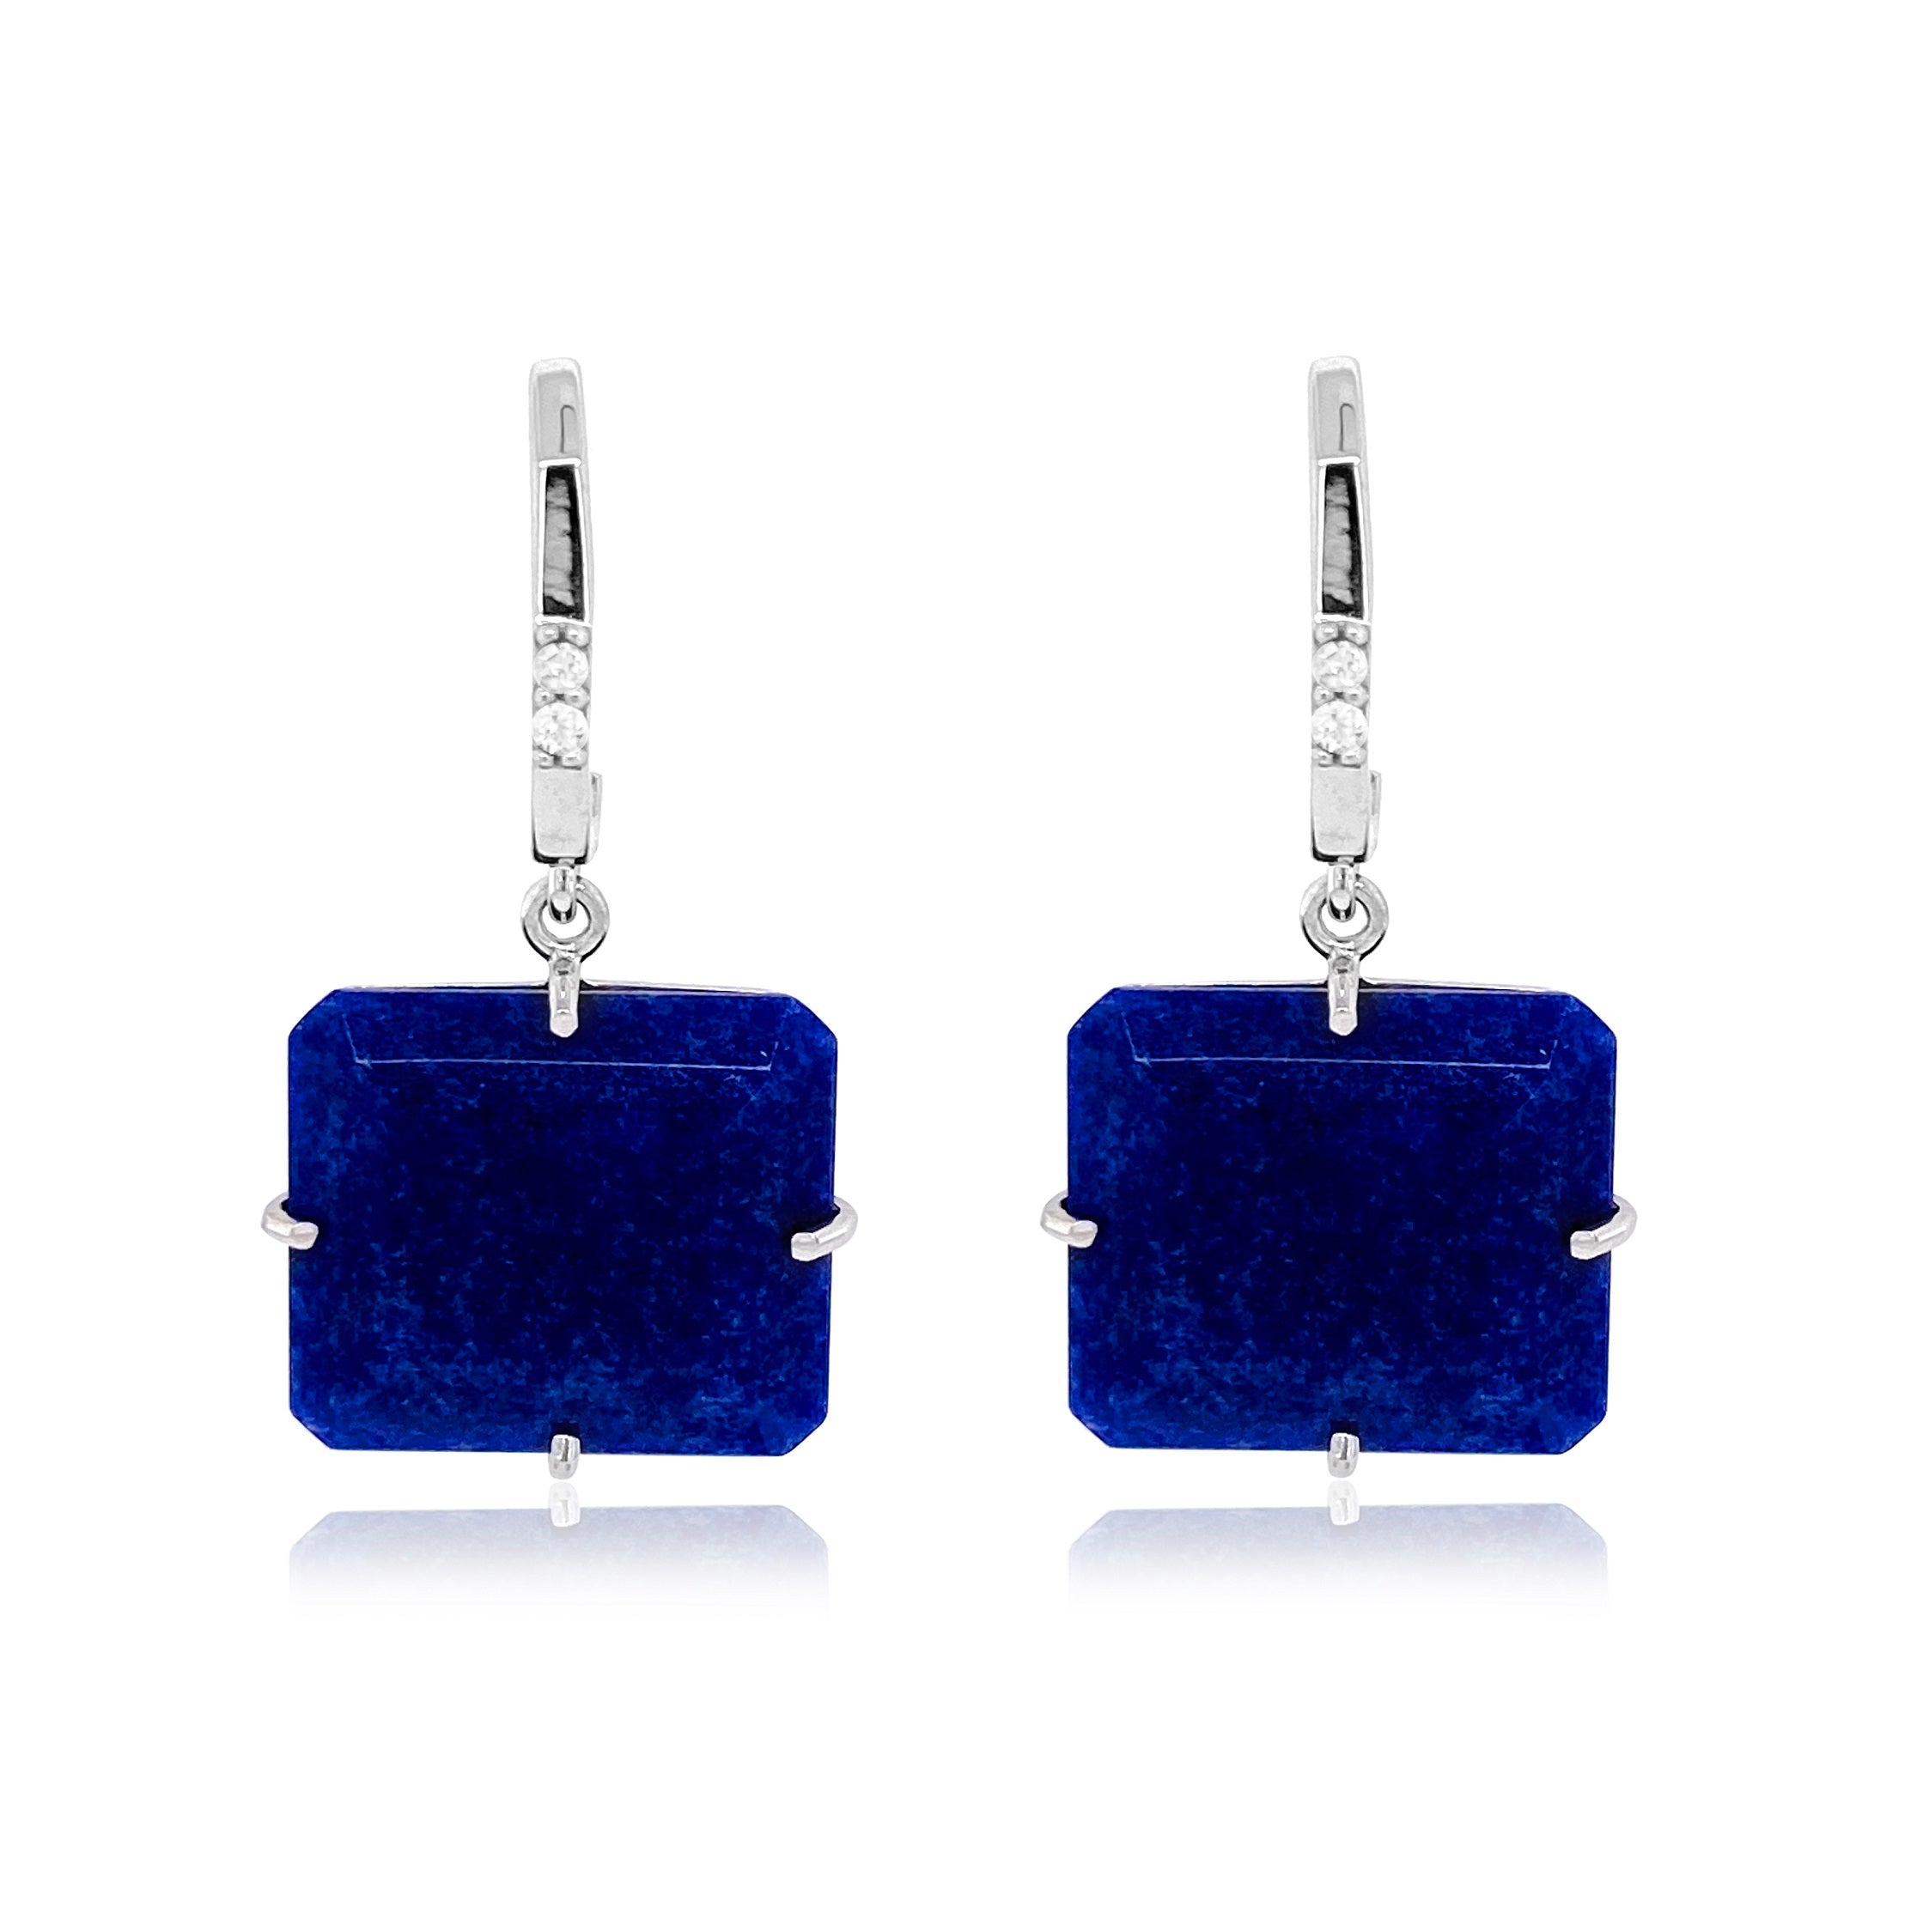 COLUNA Earrings (1156) - Navy Blue Quartz / SS